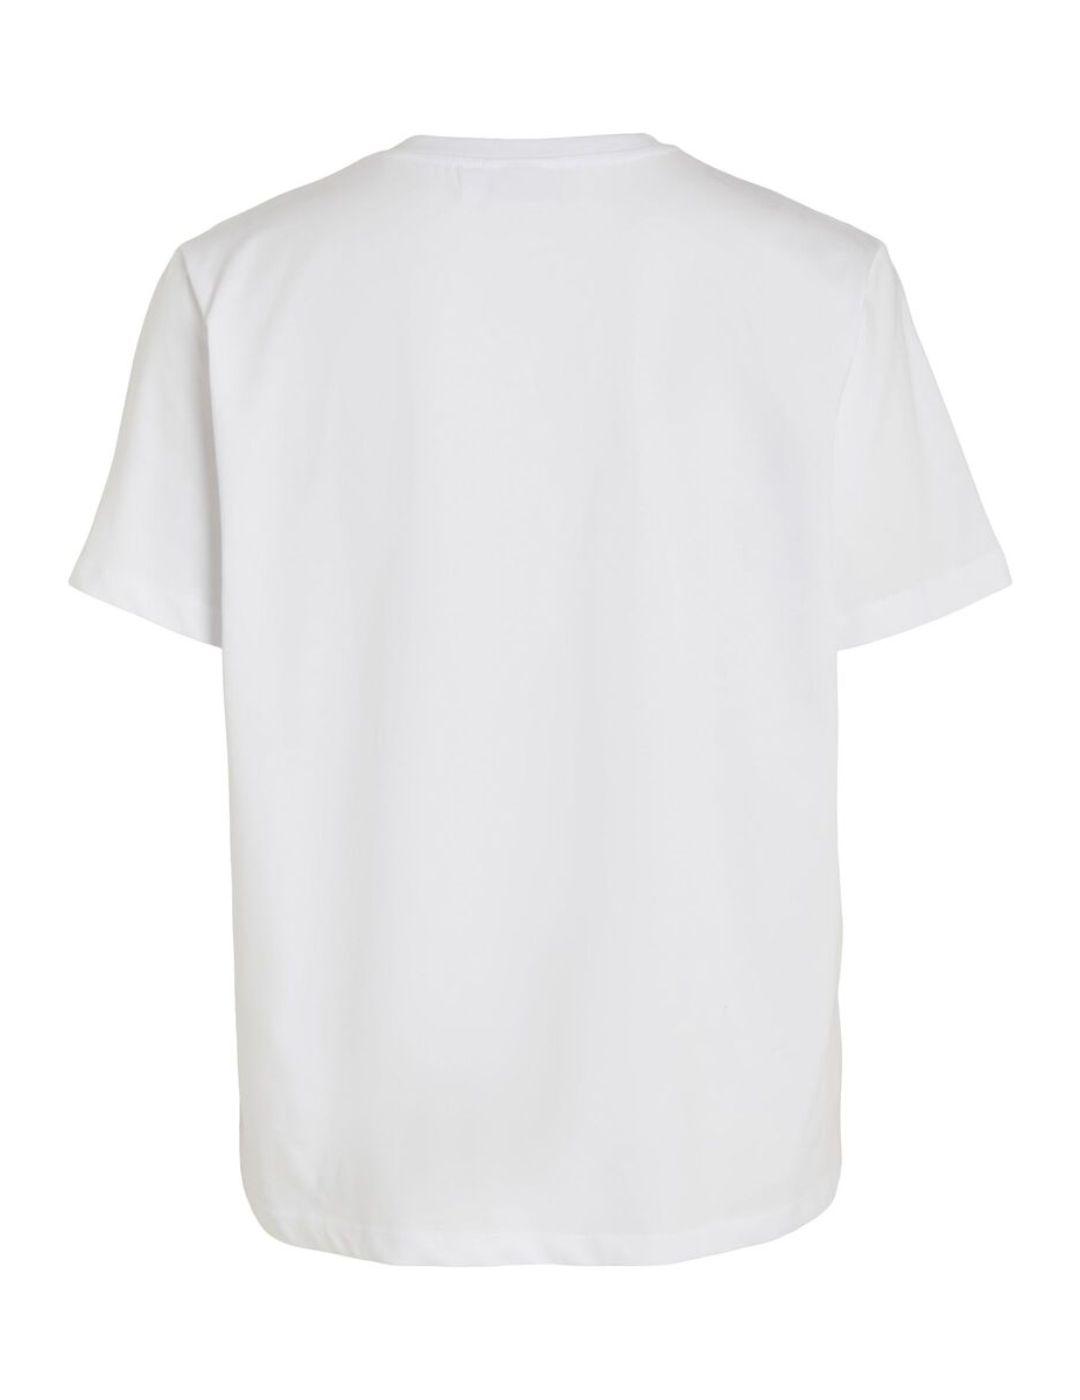 Camiseta Vila Women blanca para mujer-a